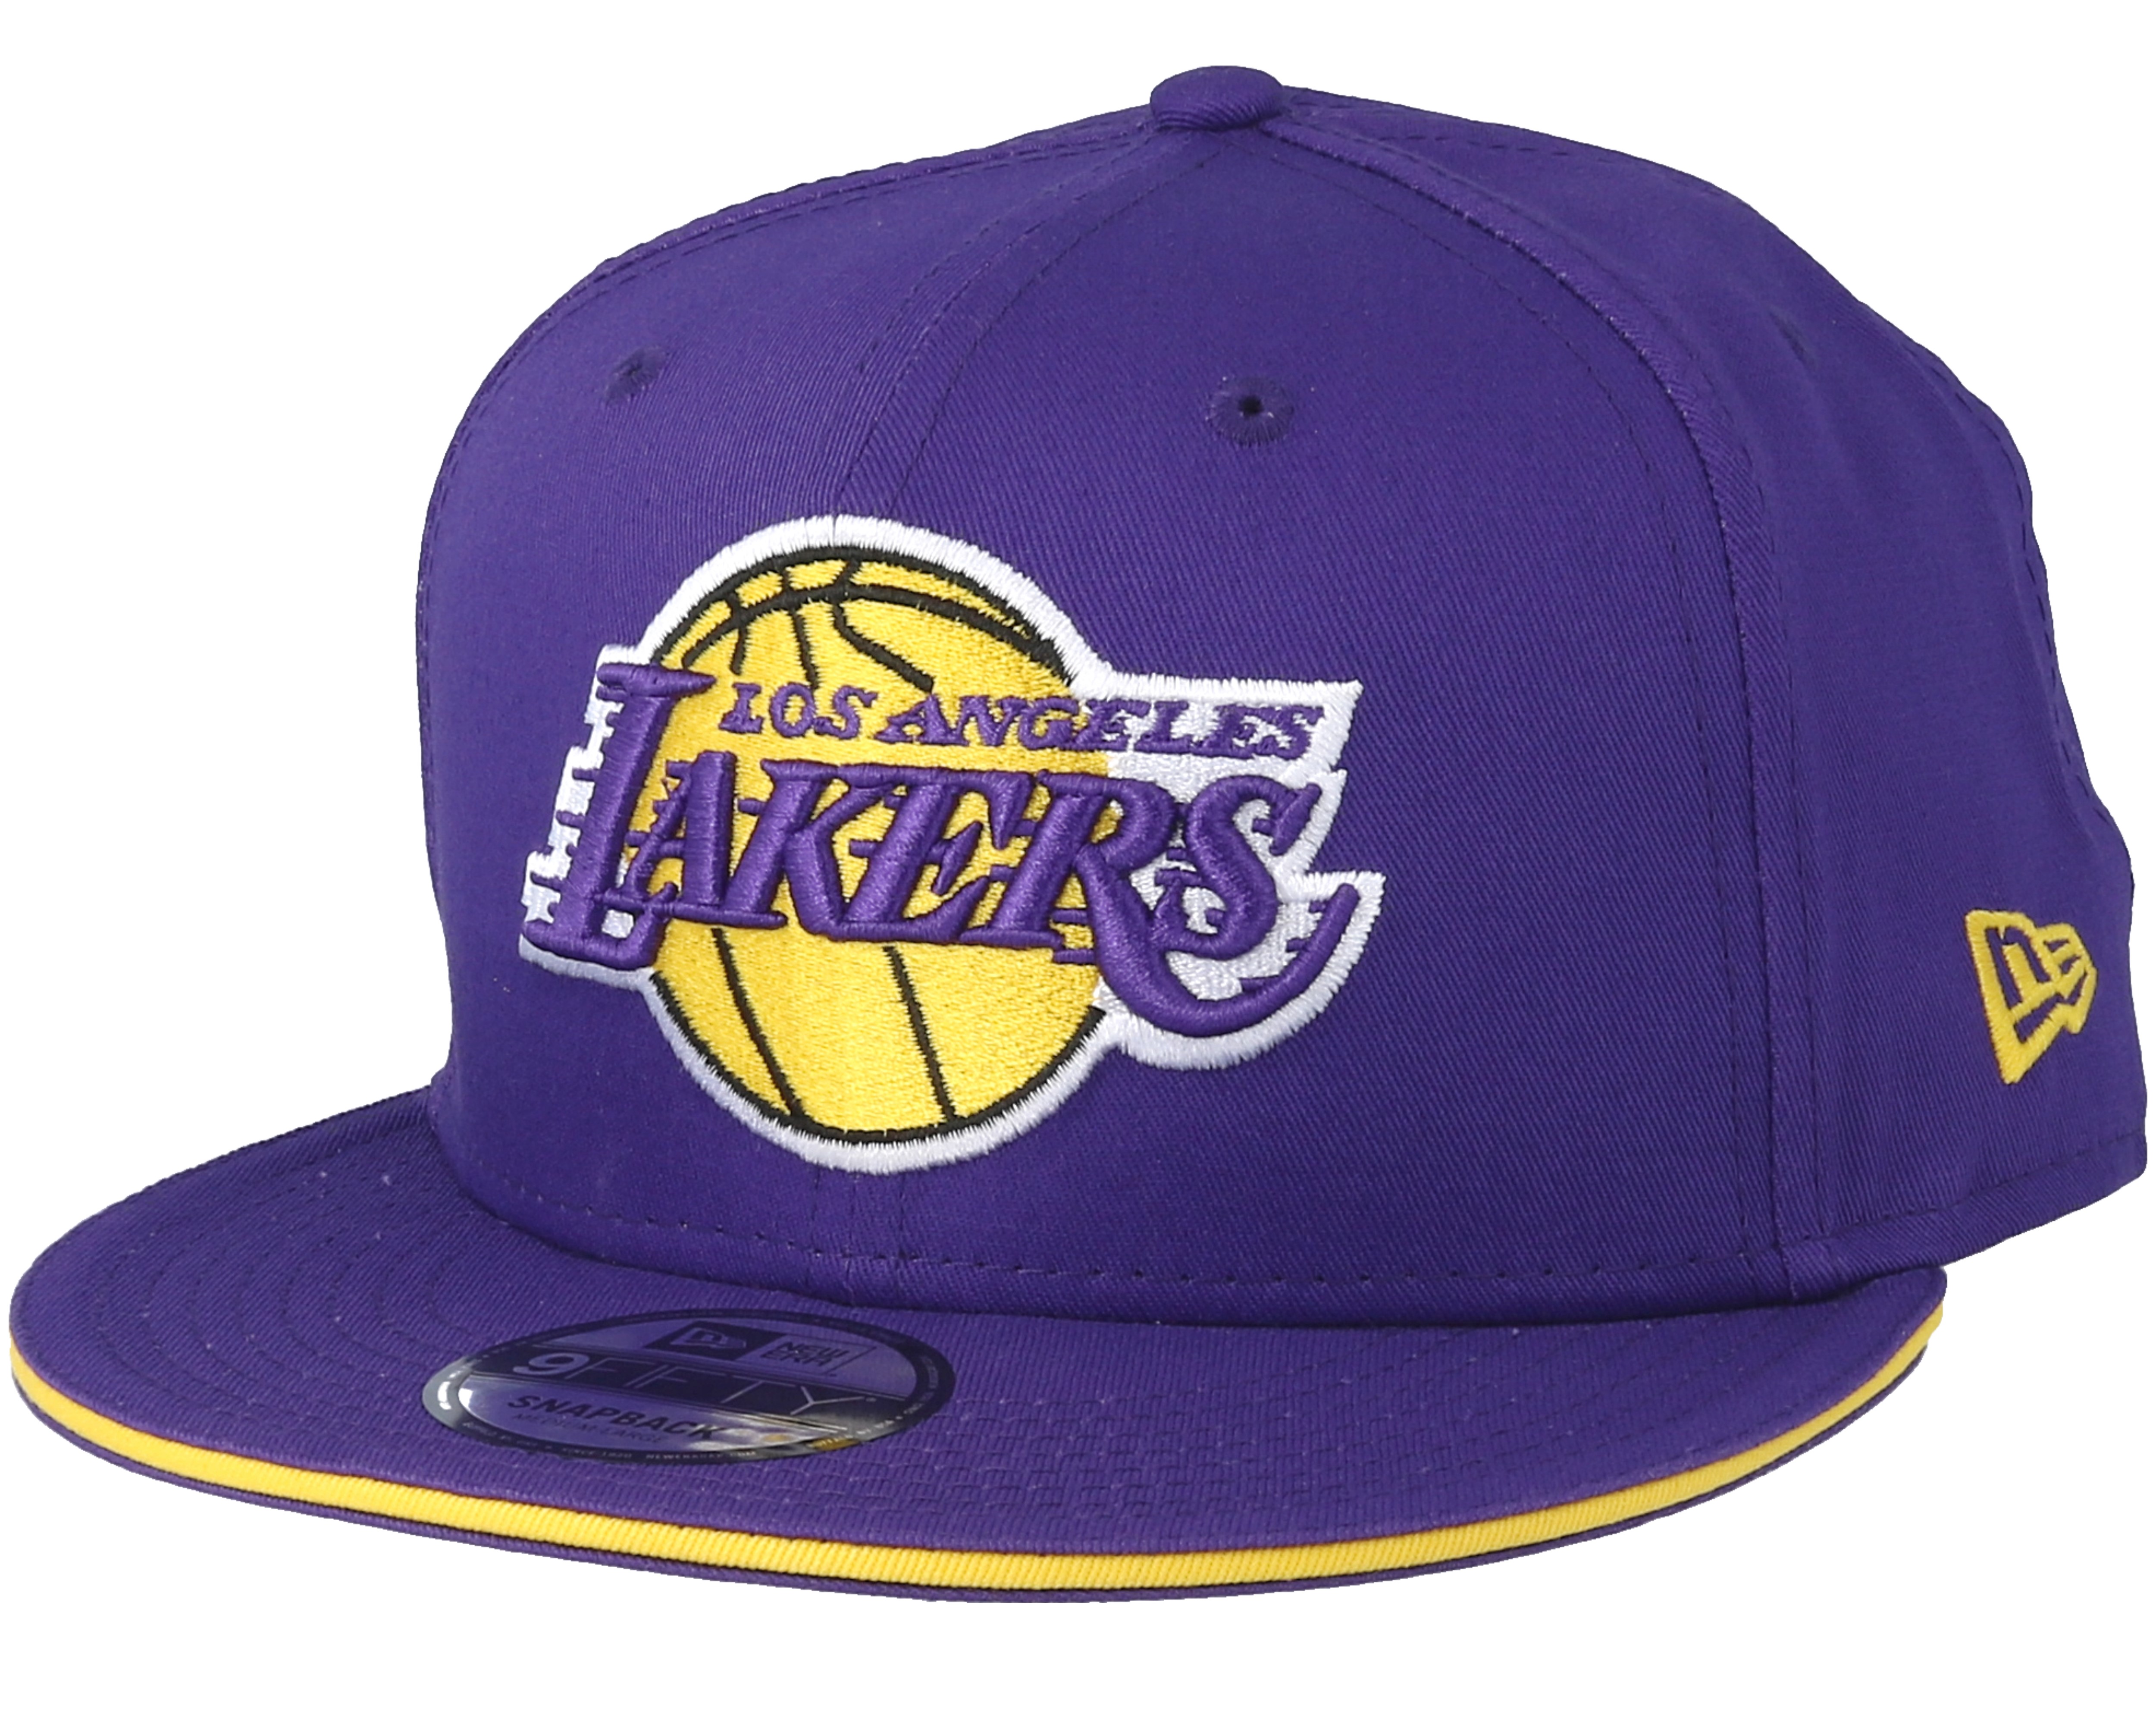 LA Lakers Classic Tm Purple Snapback - New Era caps | Hatstore.co.uk